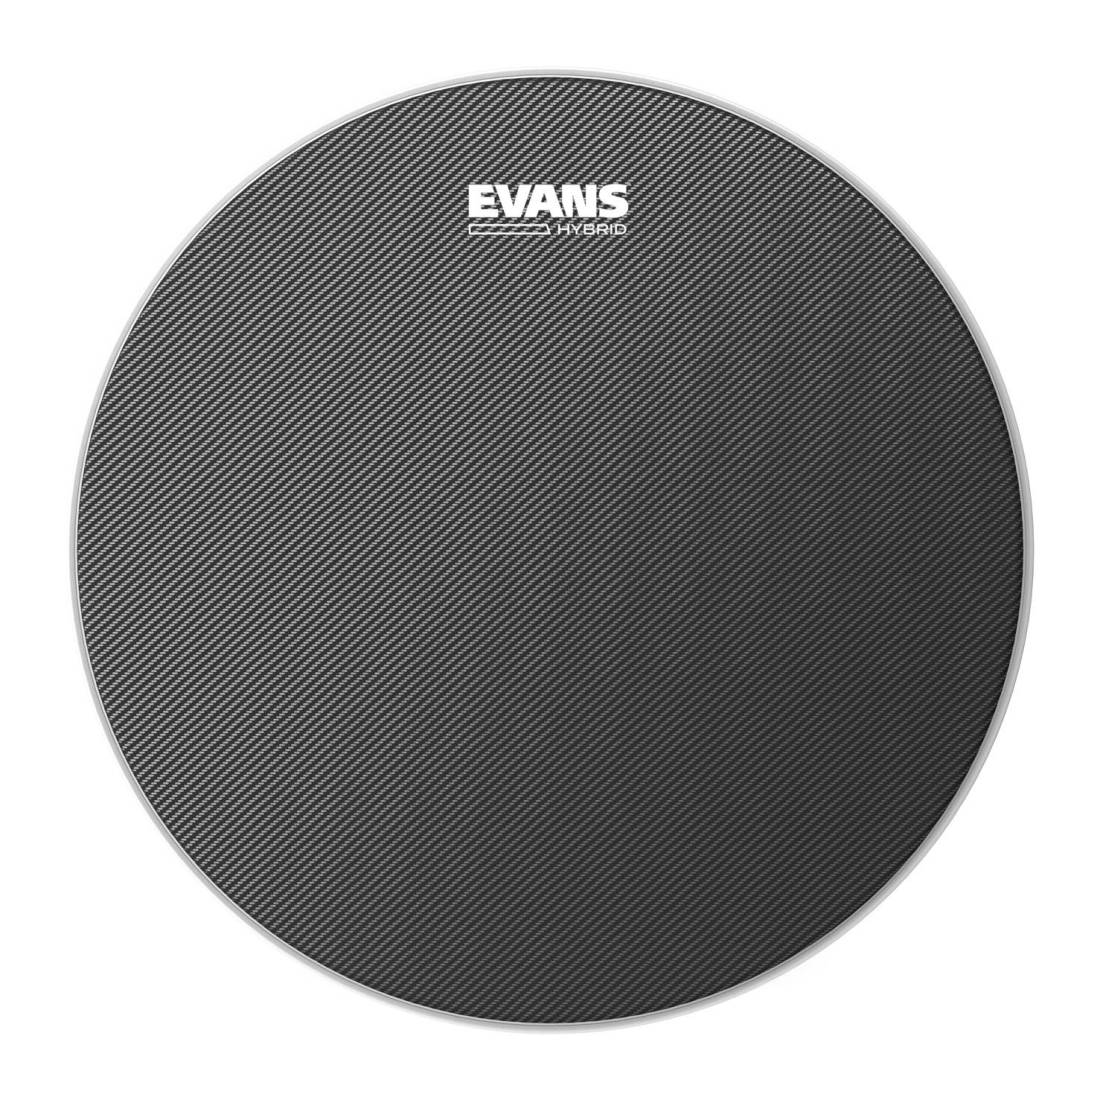 SB13MHG - Evans Hybrid Grey Marching Snare Drum Head, 13 Inch